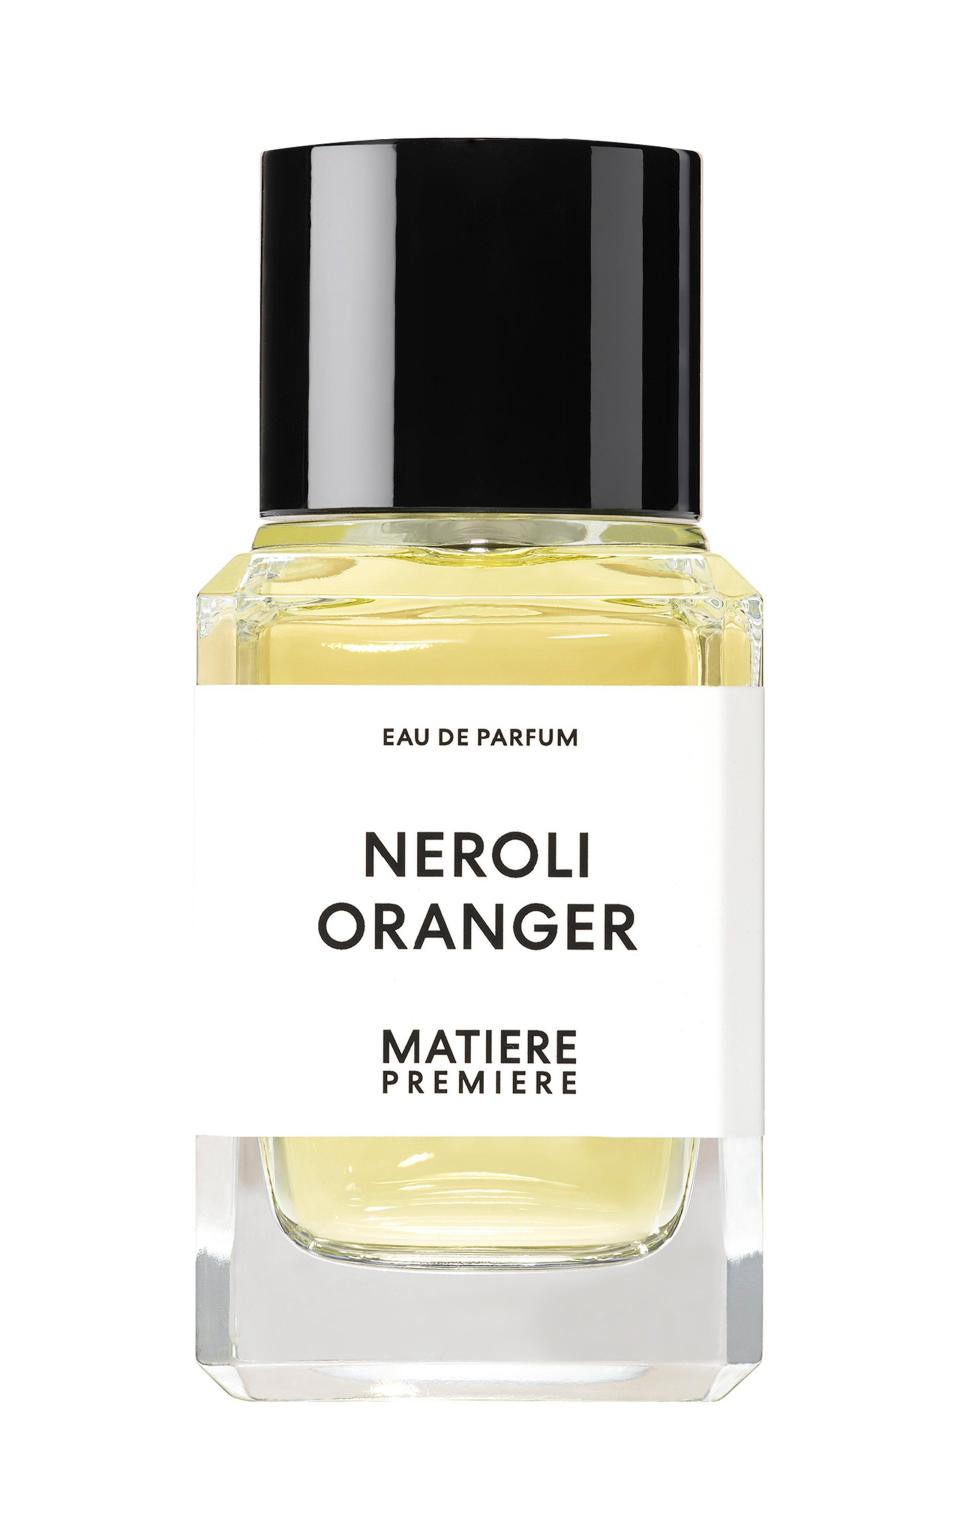 6) Neroli Oranger Eau de Parfum